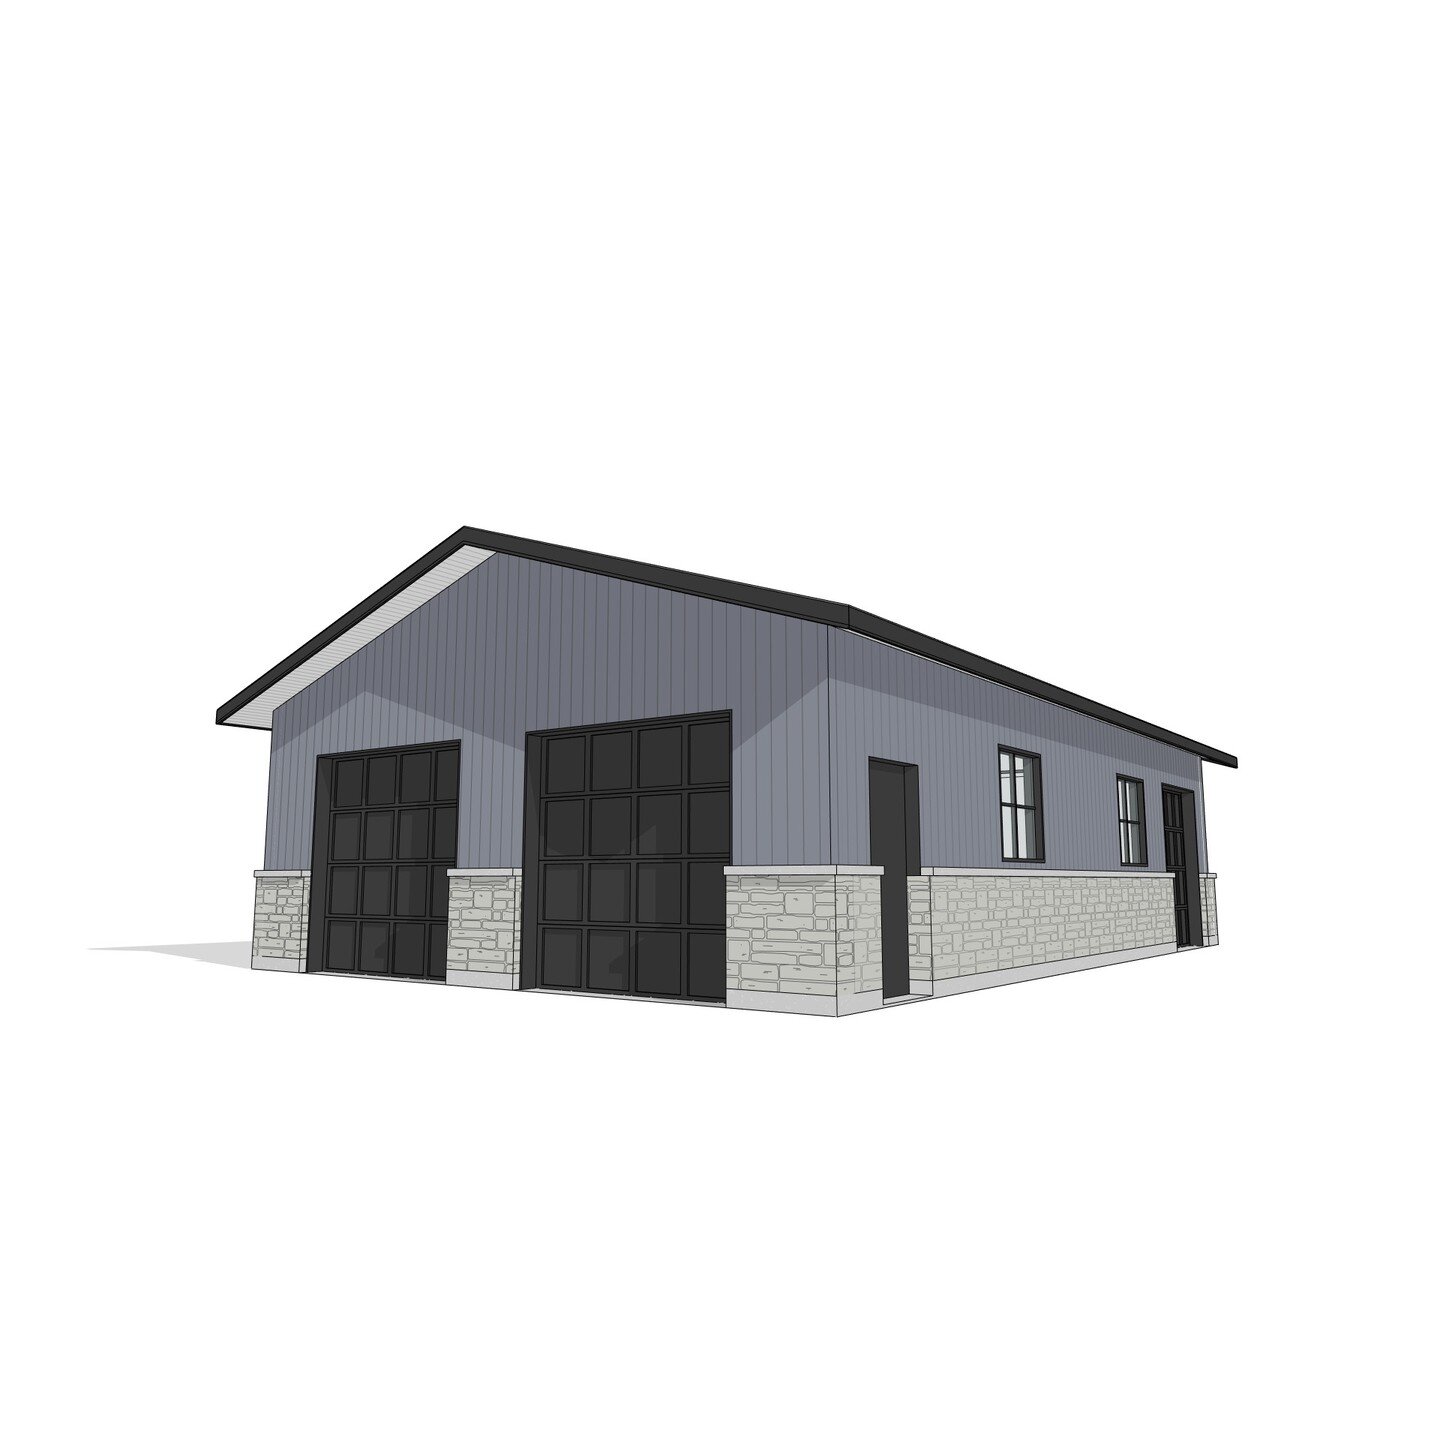 1 Storey Detached Garage. #garage #accessorybuilding #workshop #stone #metal #architecture #revit #perspective #aja #adamjodoinarchitectural #design